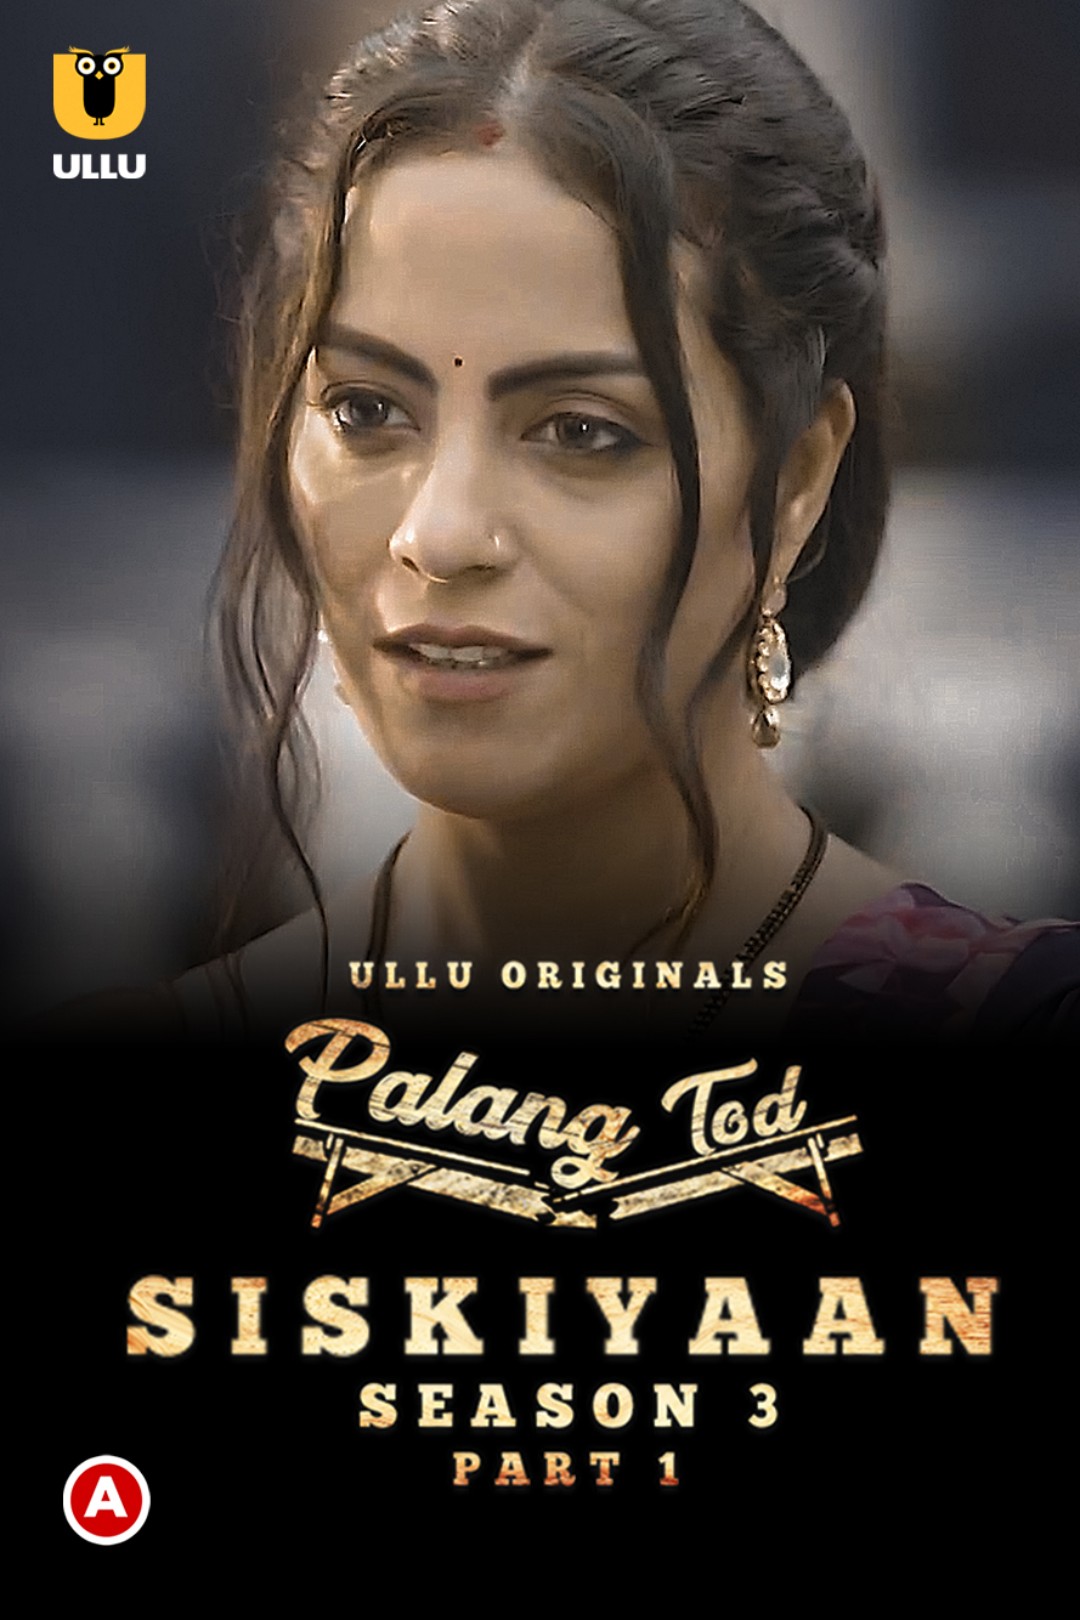 Palang Tod (Siskiyaan – Season 3 ) – Part 1.2022 Hindi Dub [Voice Over] 1080p 720p 480p WEB-DL Online Stream PariMatch